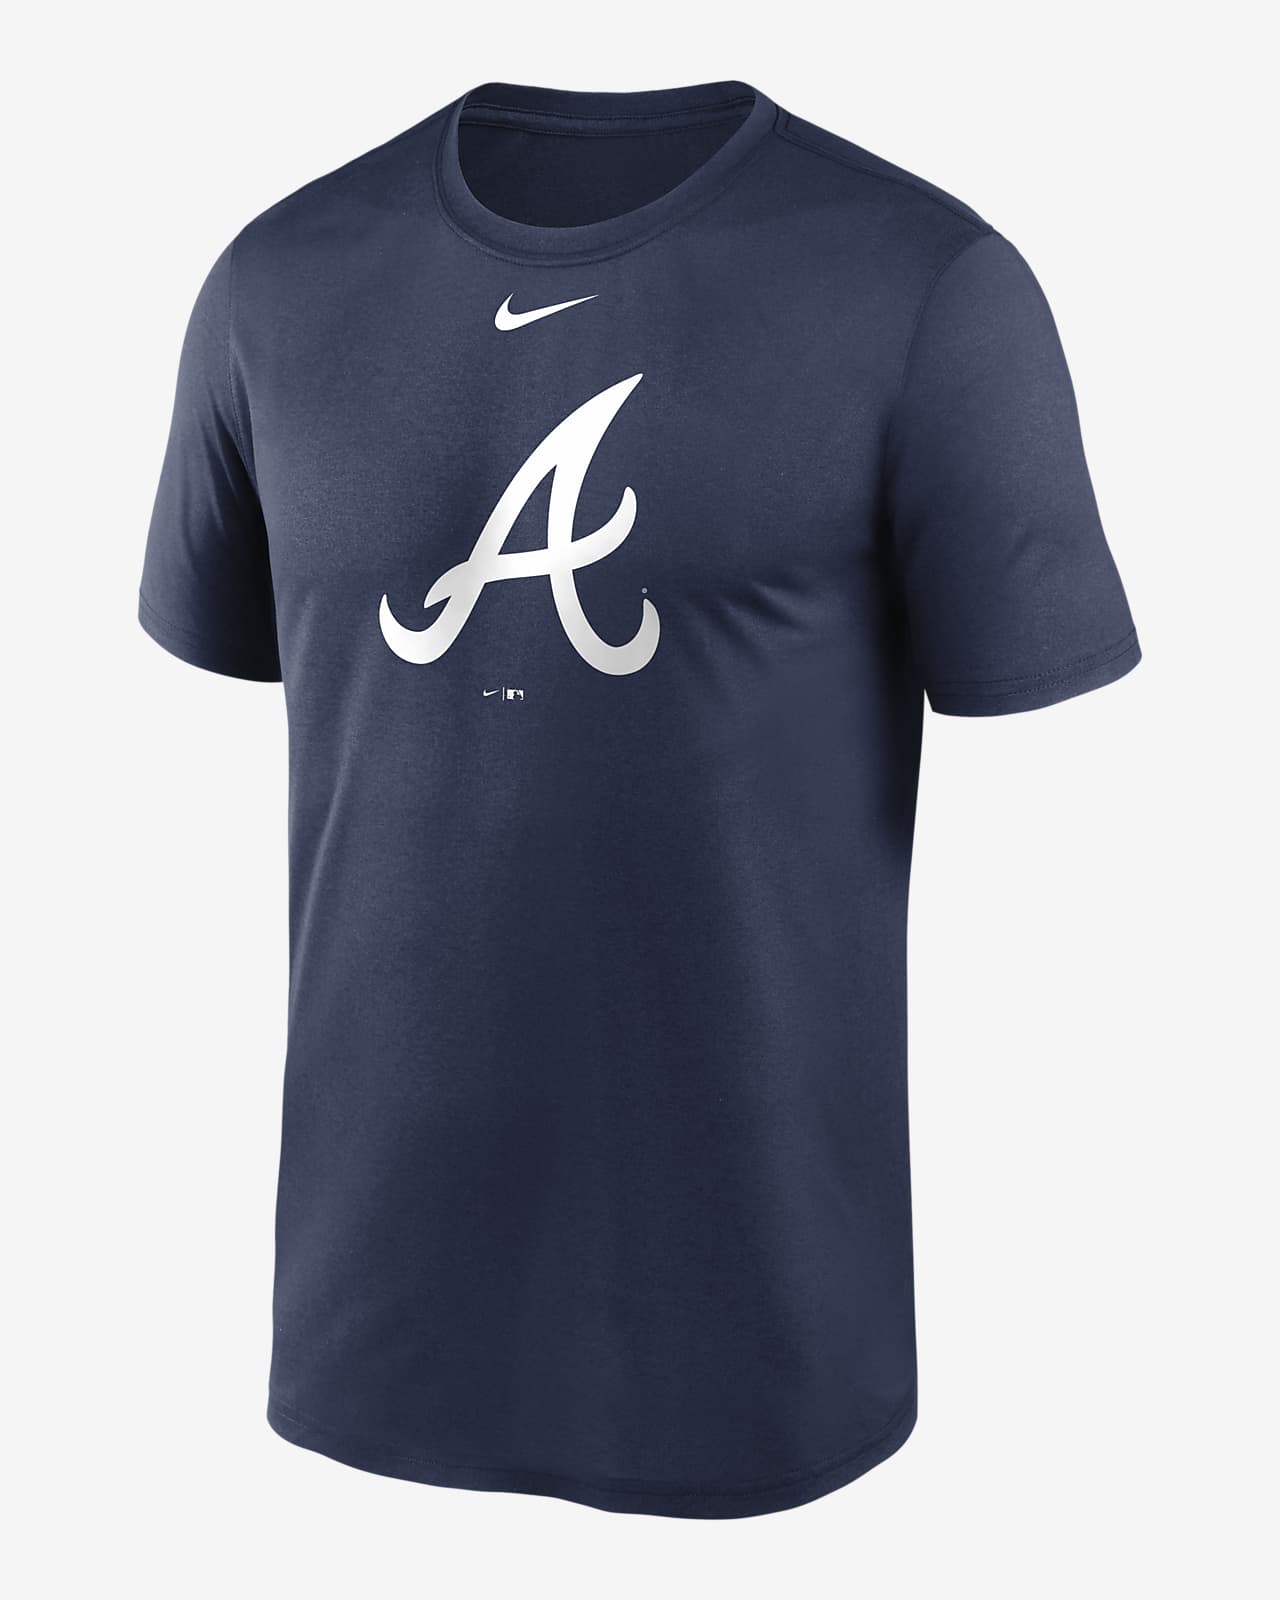 NIKE Atlanta Braves, dry fit polo shirt size small EUC MLB